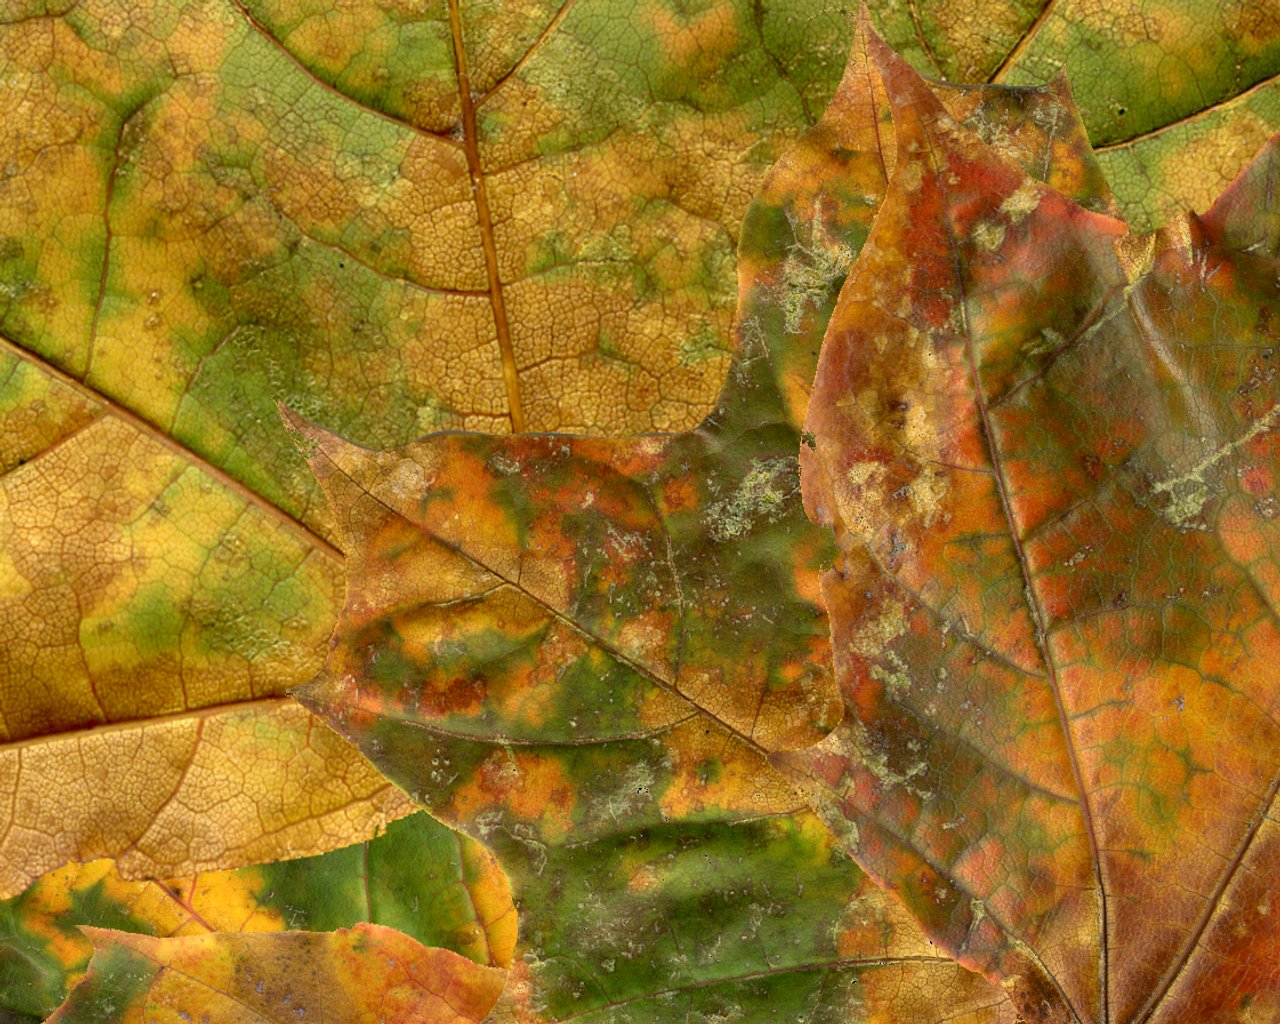 Luonne desktop background. Original leaf scans by Matti, composition by Janne